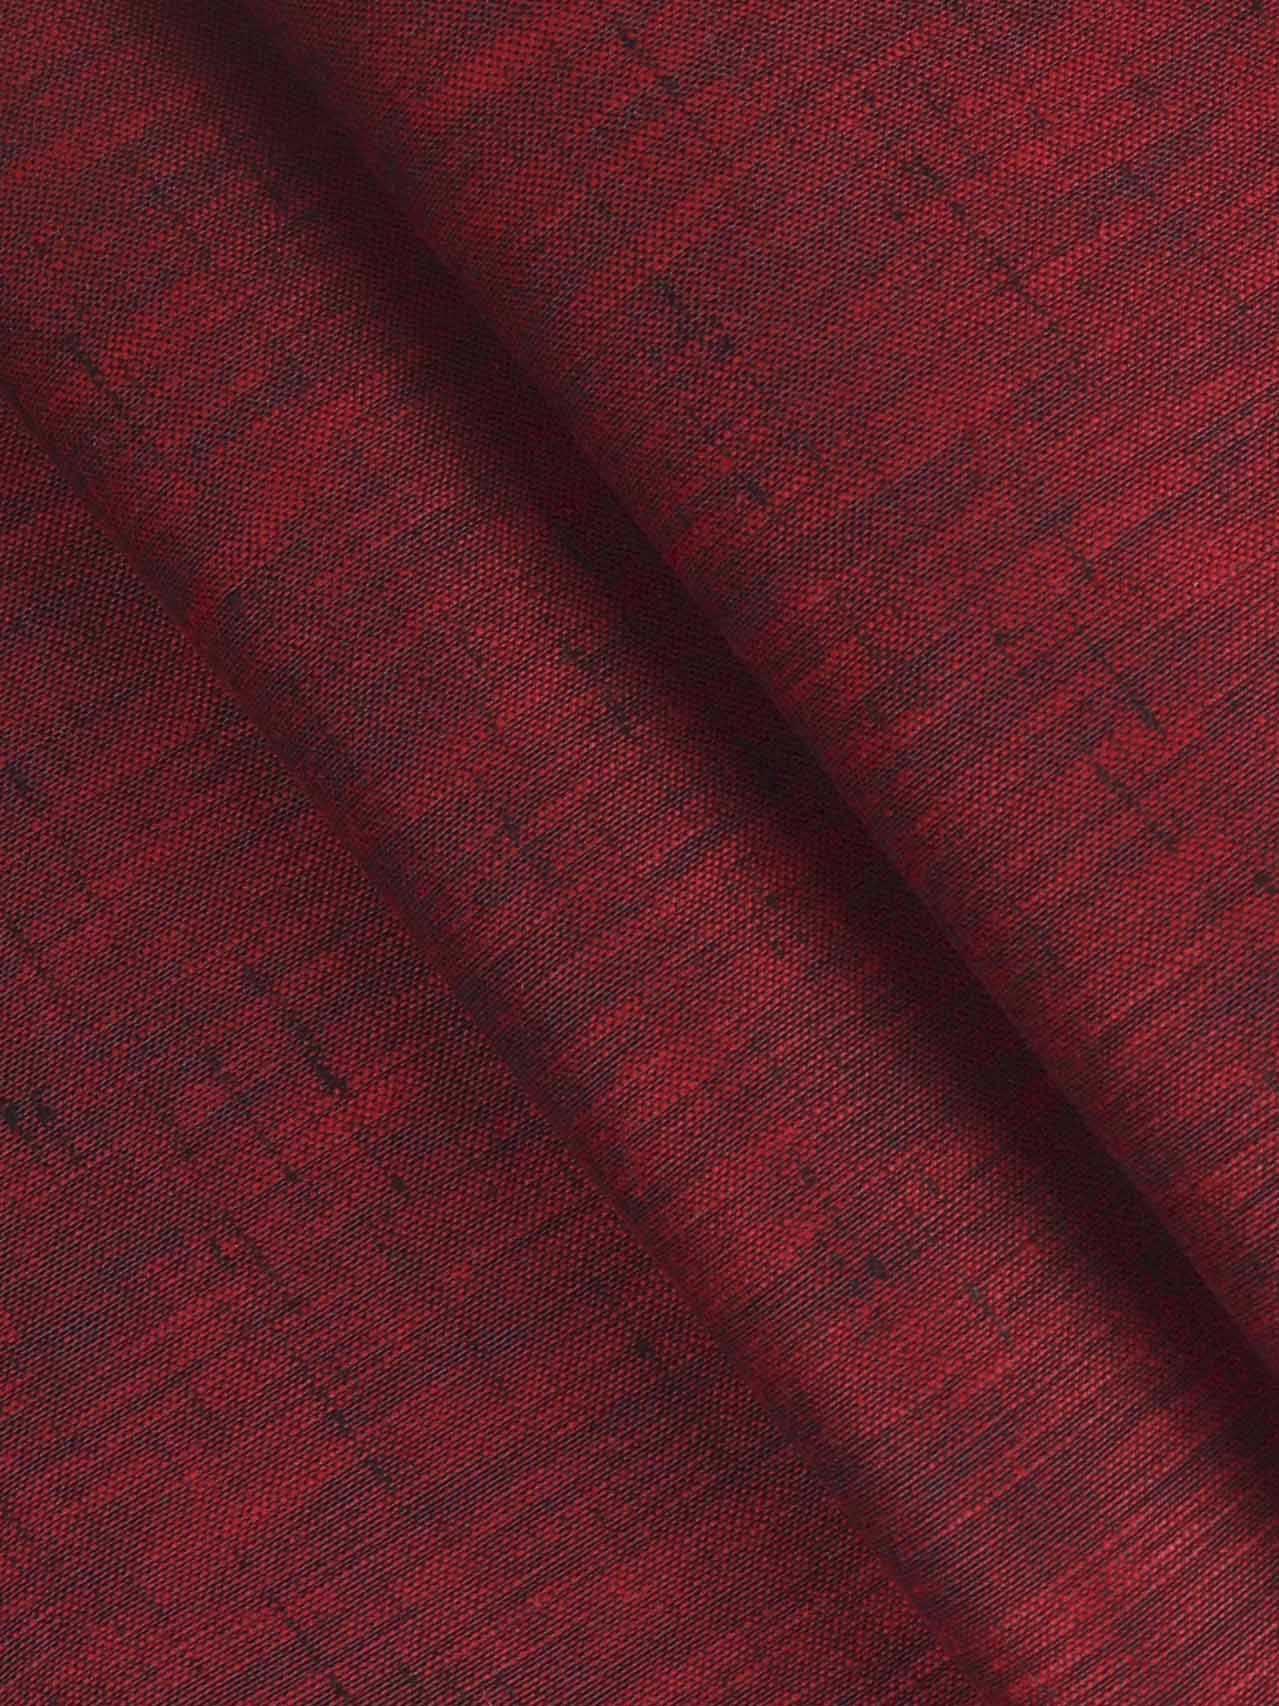 Cotton Blend Maroon Colour Plain Shirt Fabric Infinity-Close view